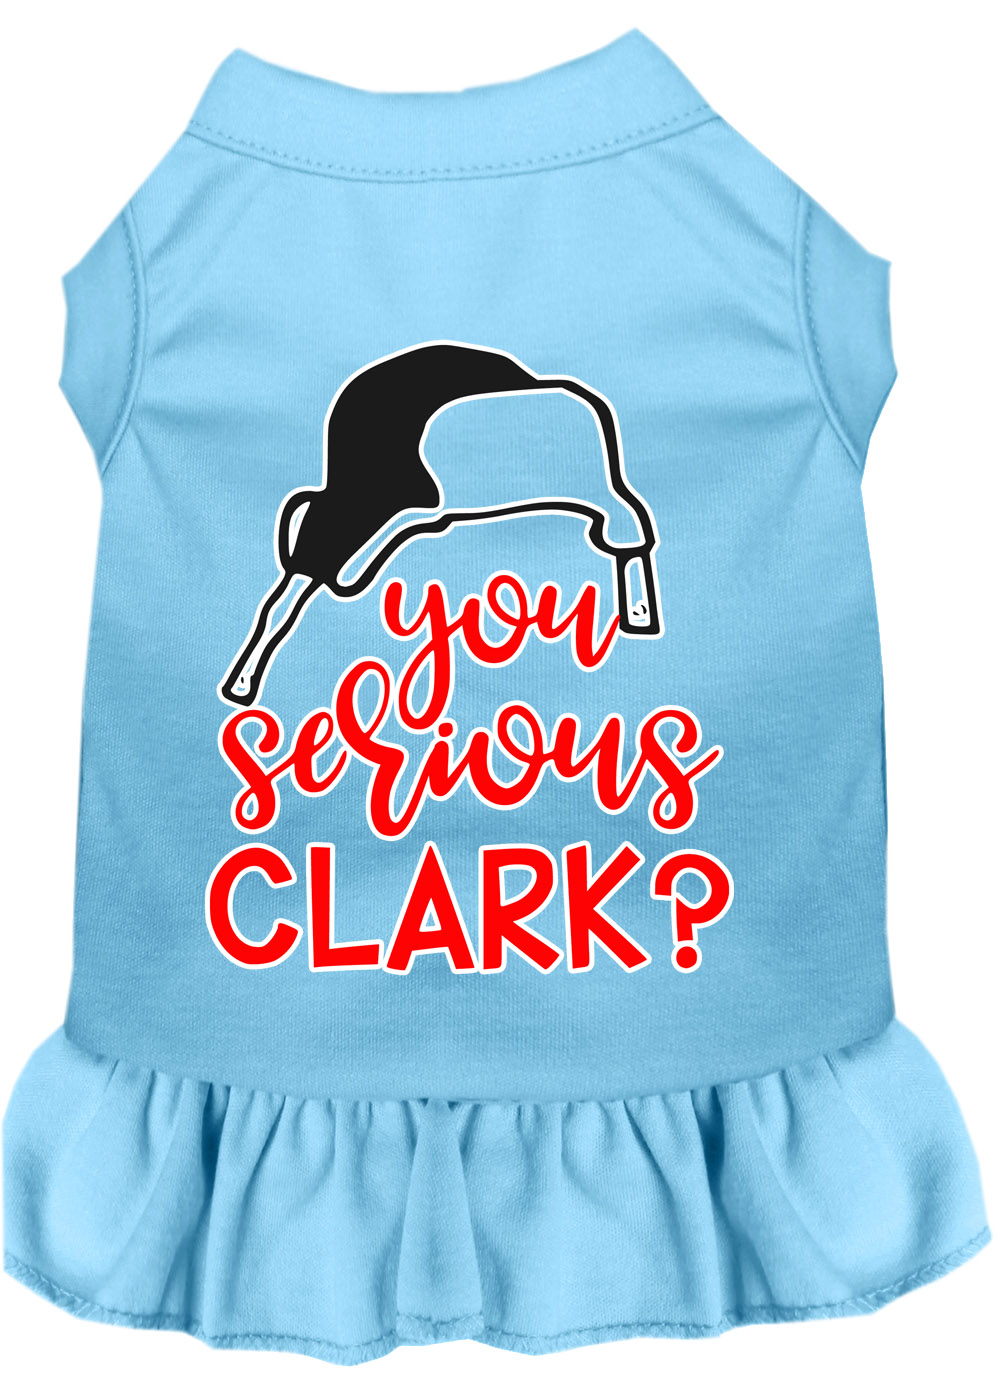 You Serious Clark? Screen Print Dog Dress Baby Blue Med